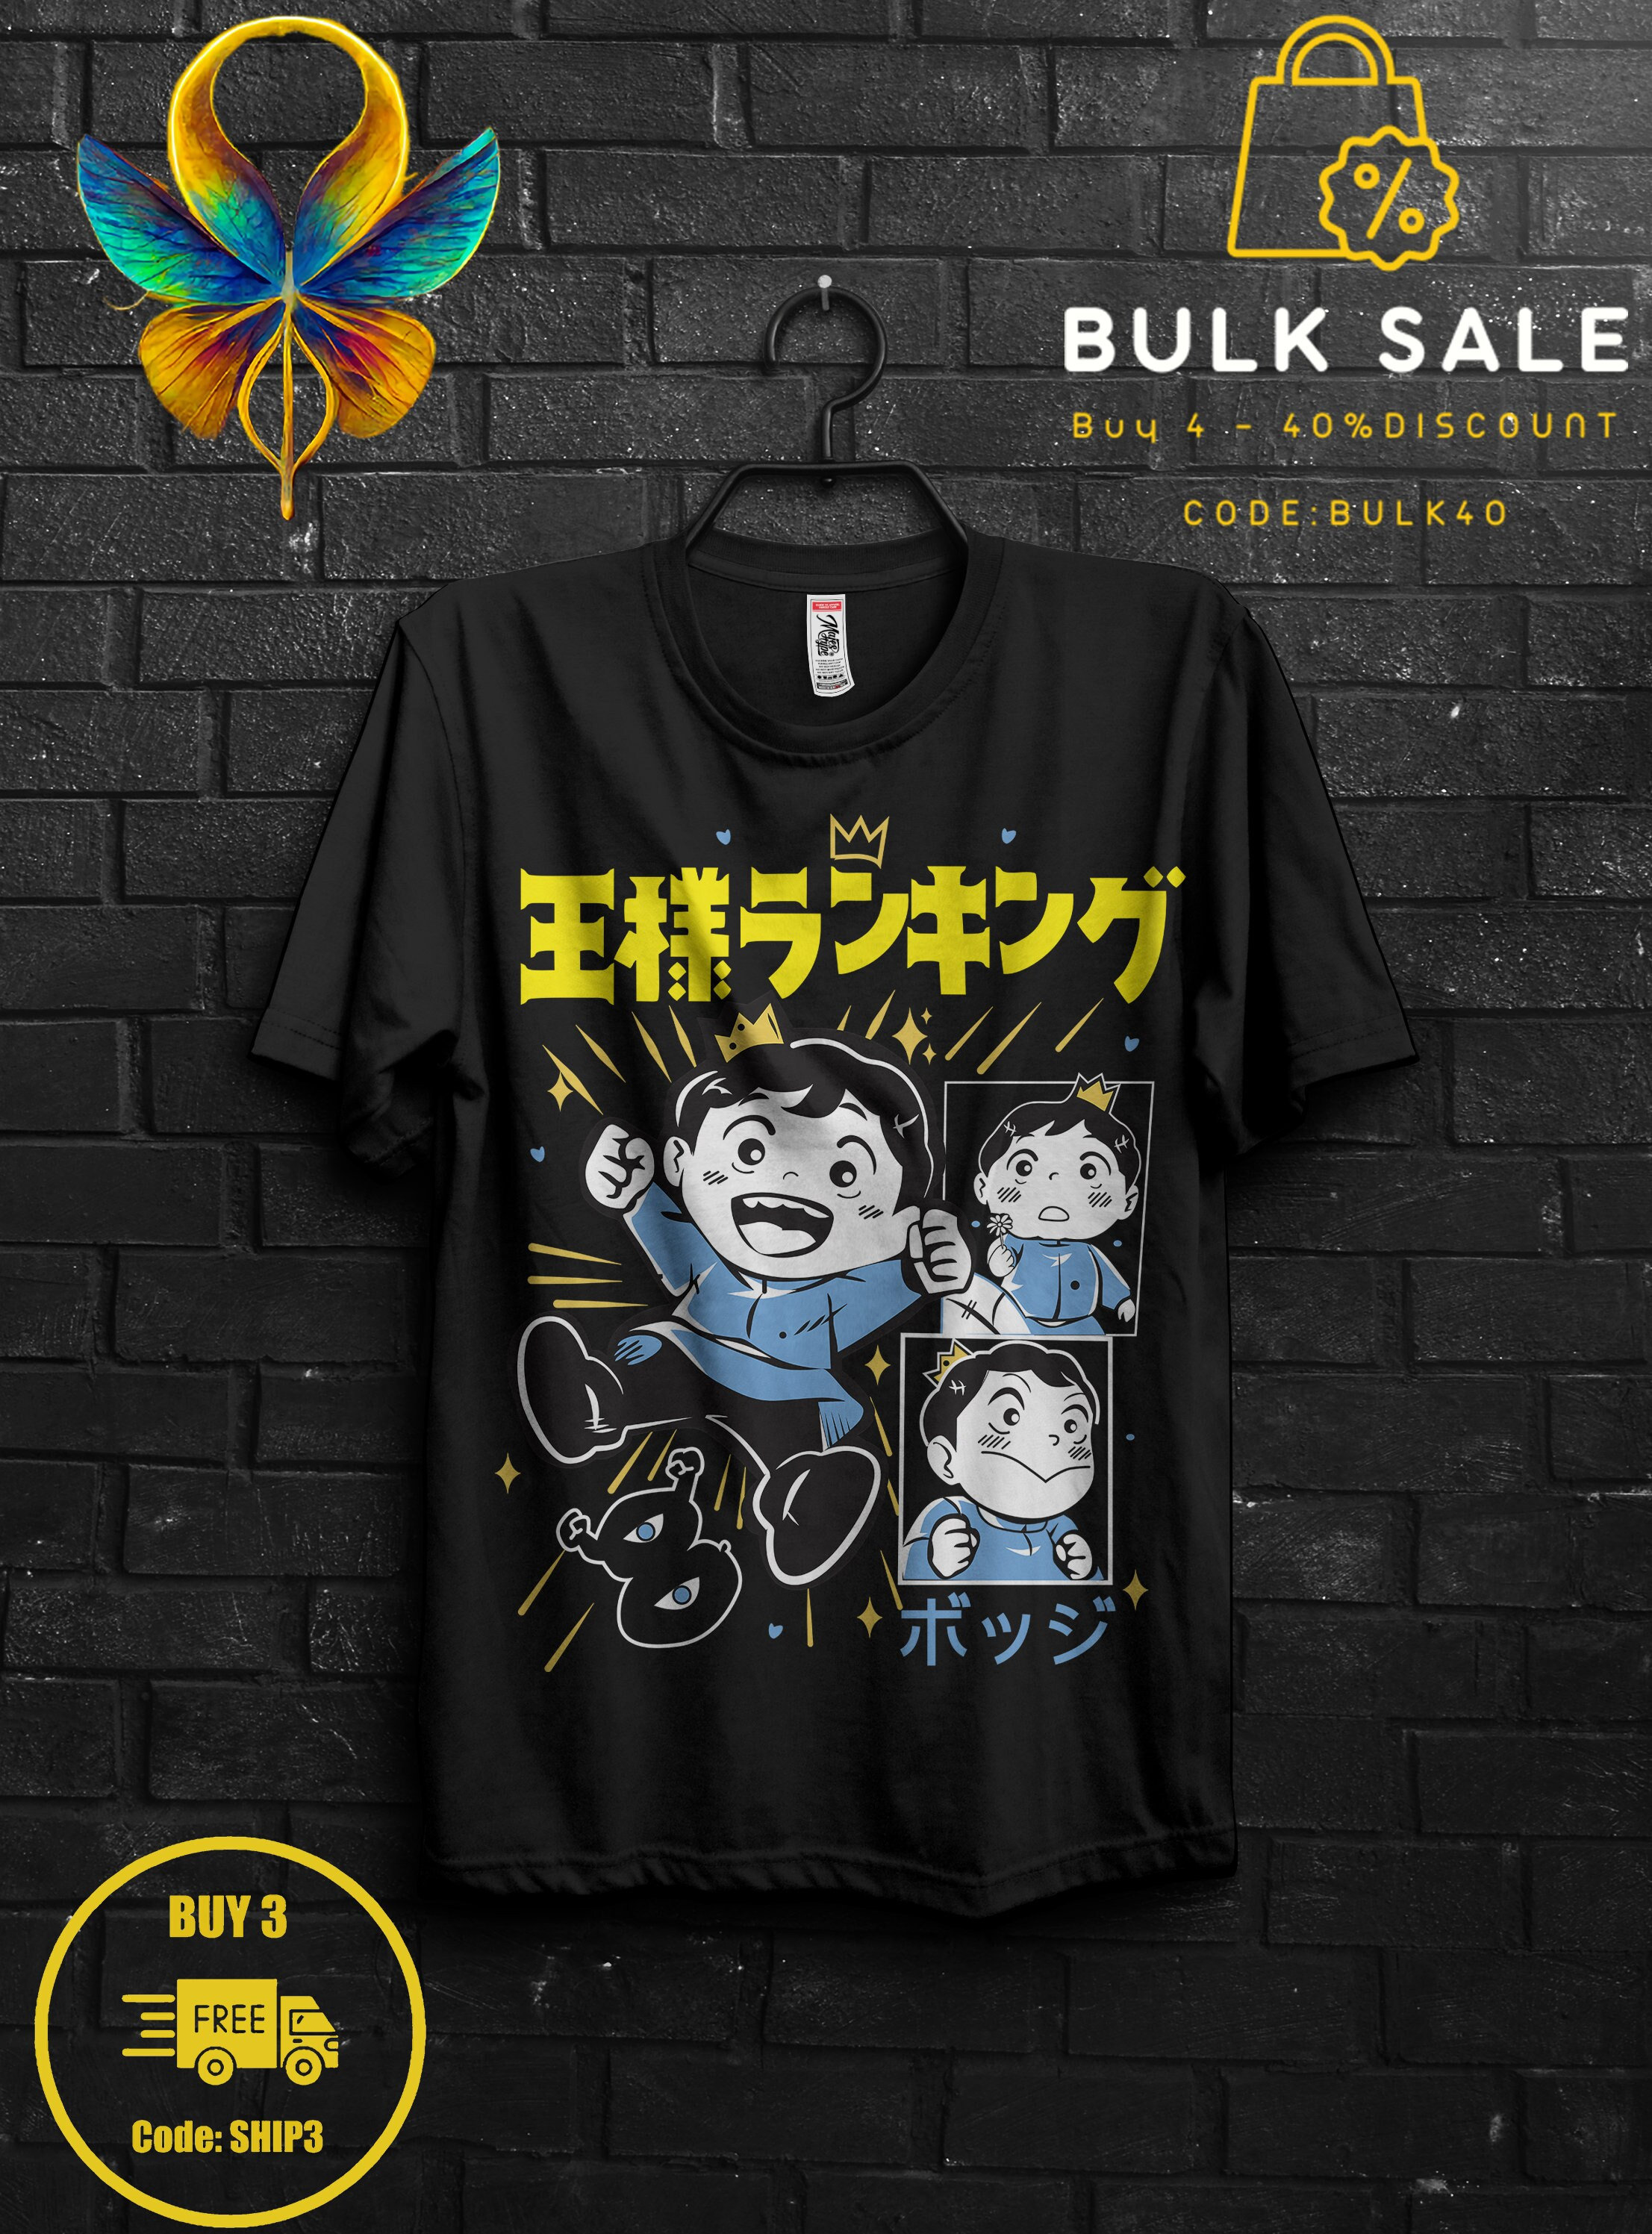 Ousama Ranking Bojji Pocket Tshirt Ranking Of Kings Japanese Anime Manga  Funny T Shirt 100% Cotton Camiseta For Girls Boys